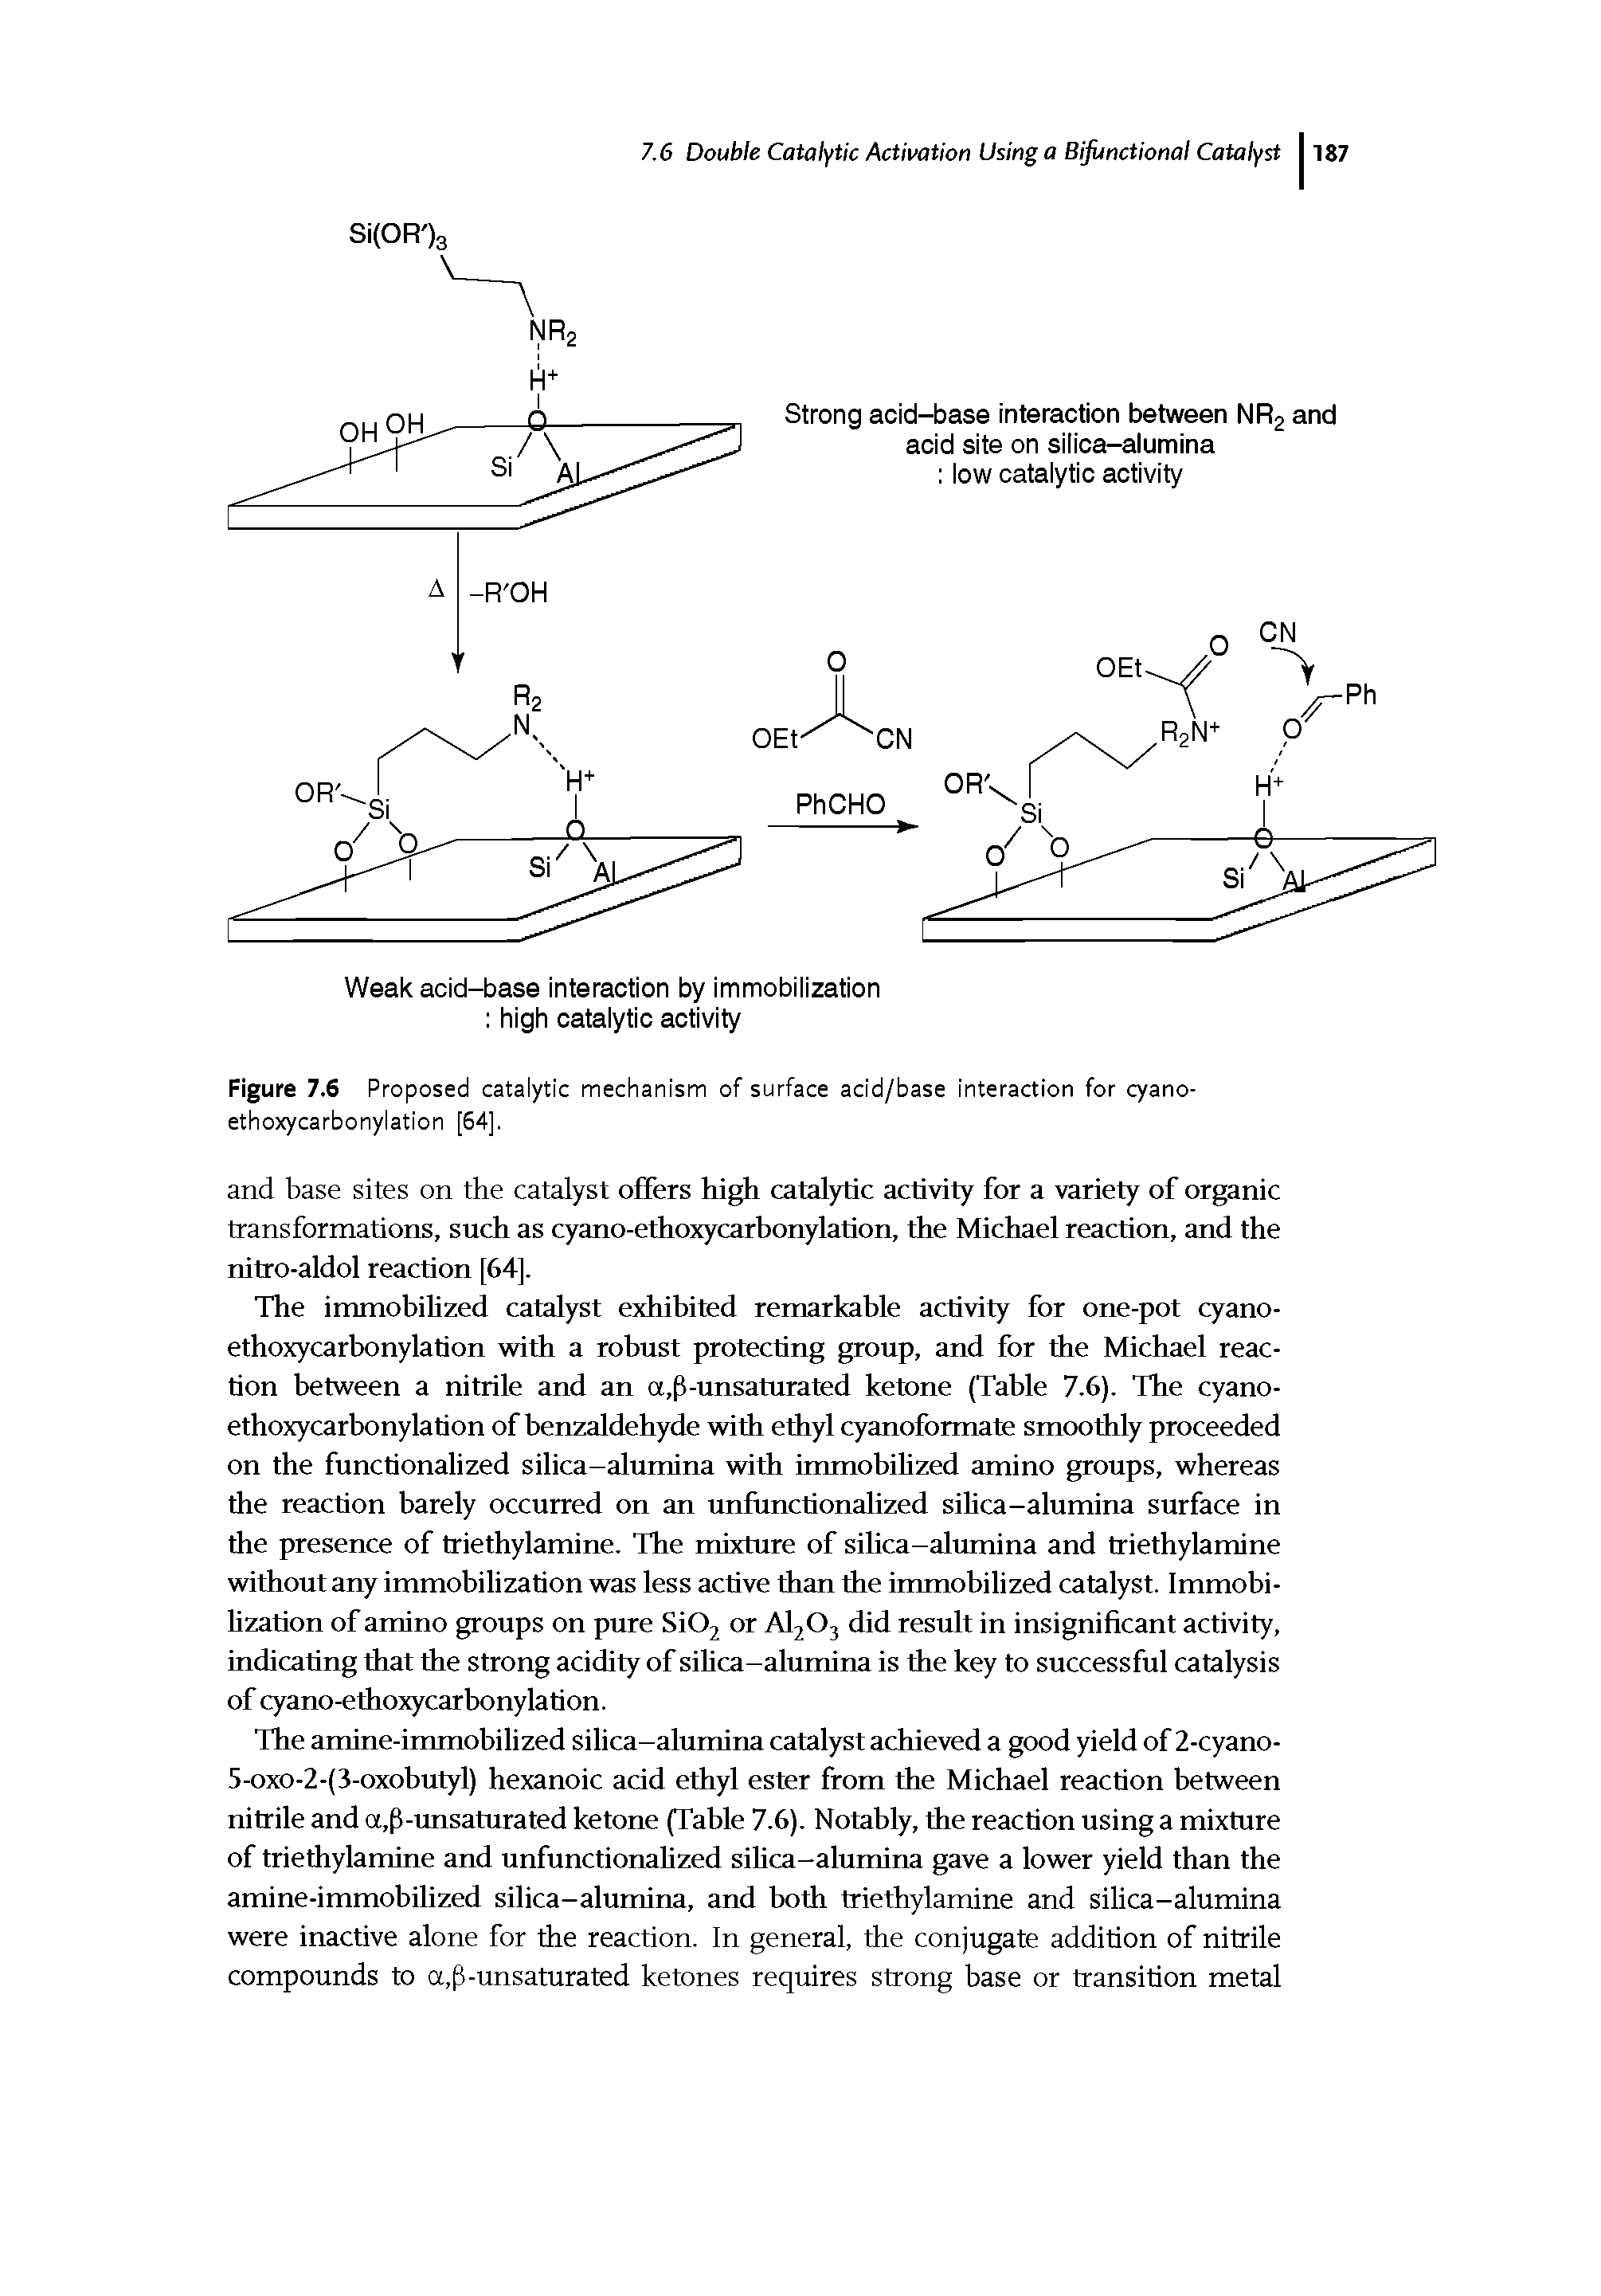 Figure 7.6 Proposed catalytic mechanism of surface acid/base interaction for cyano-ethoxycarbonylation [64].